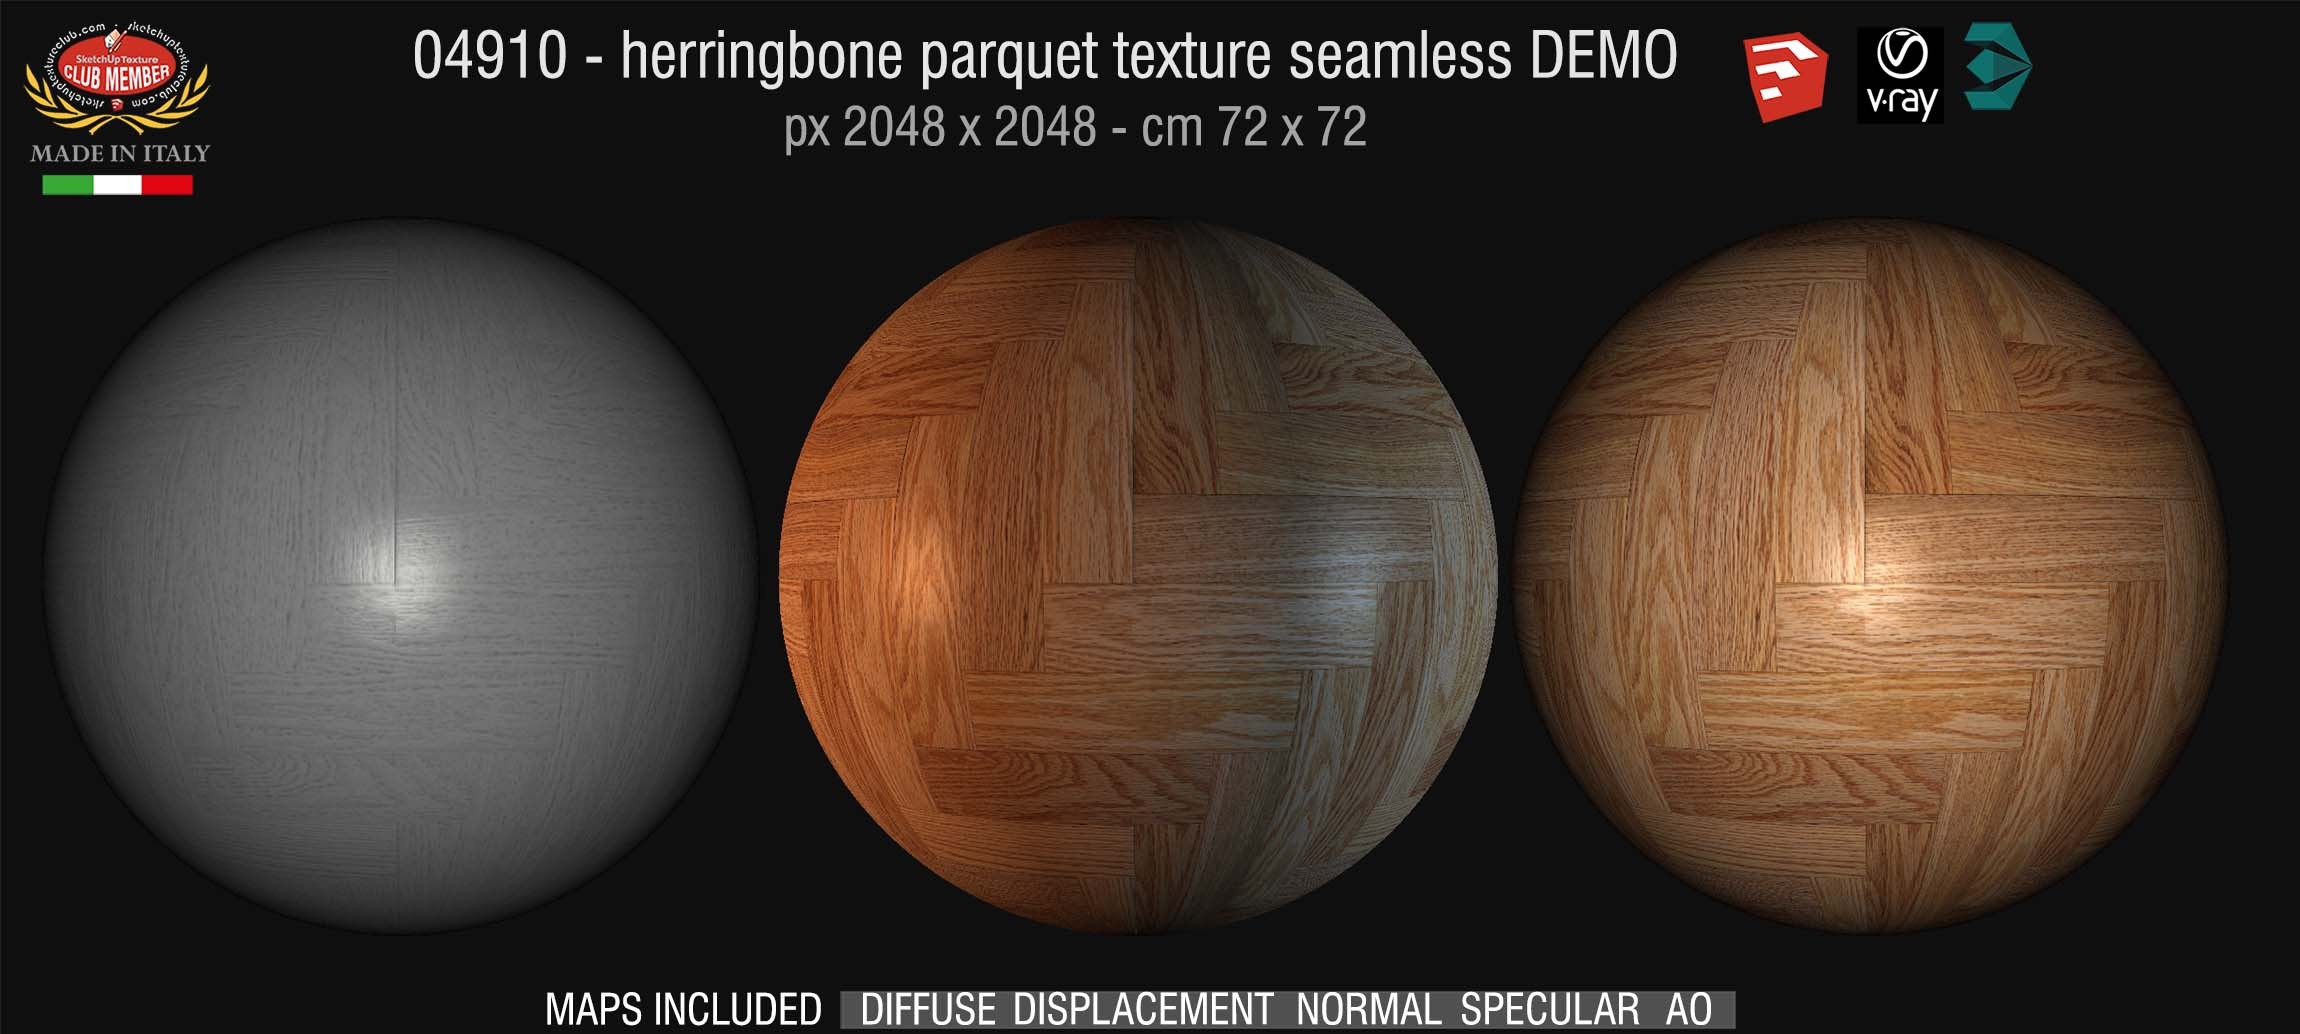 04910 HR Herringbone parquet texture seamless + maps DEMO